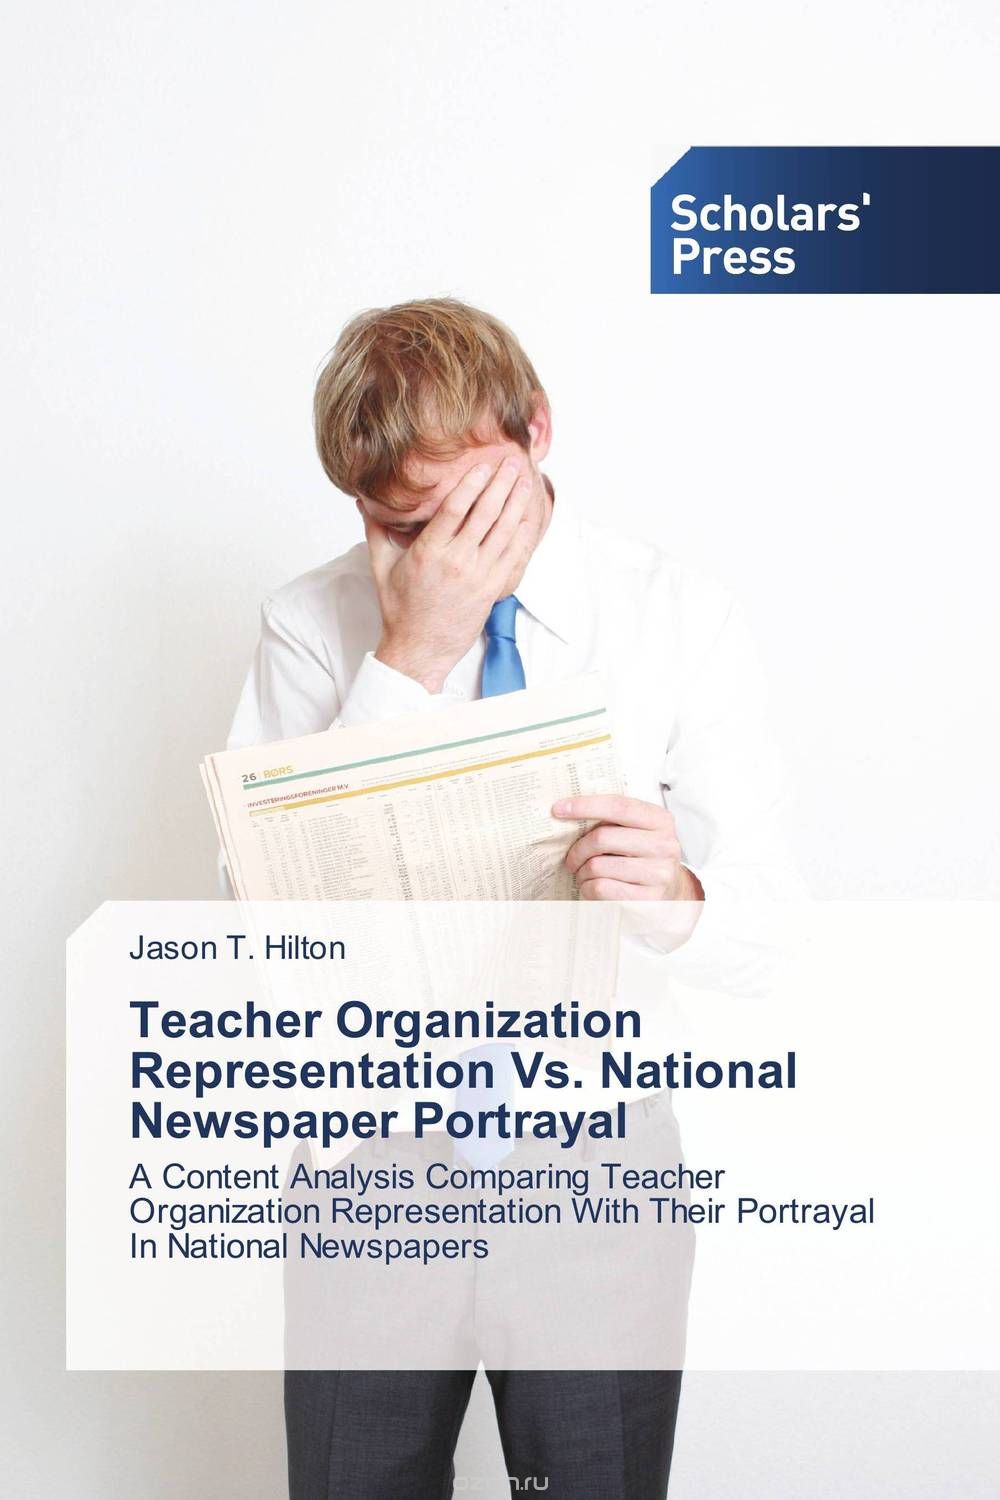 Скачать книгу "Teacher Organization Representation Vs. National Newspaper Portrayal"